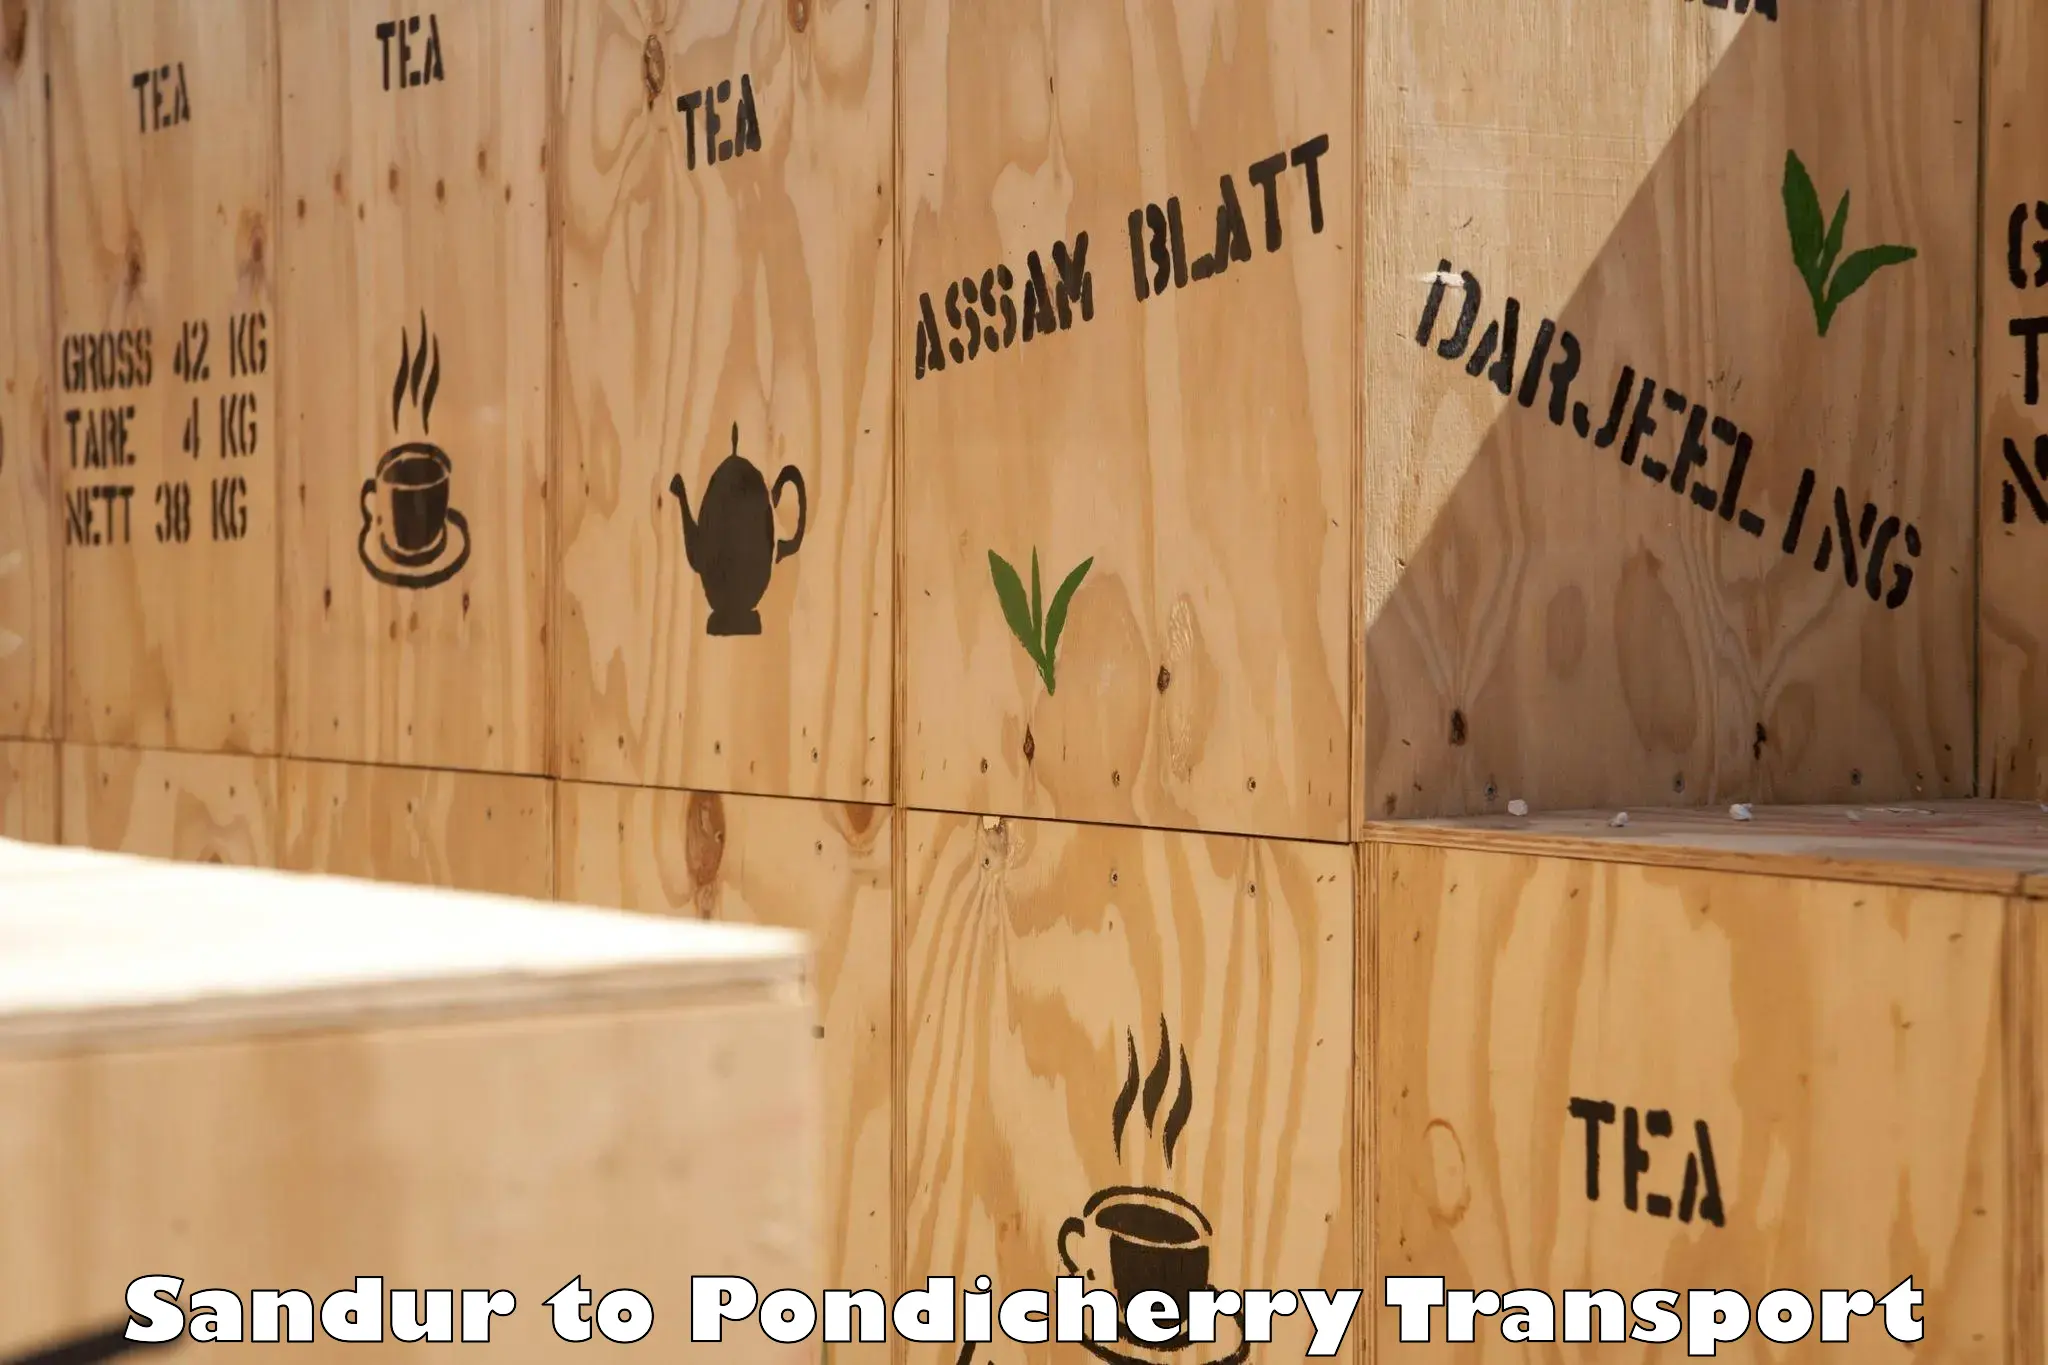 Transport in sharing Sandur to Pondicherry